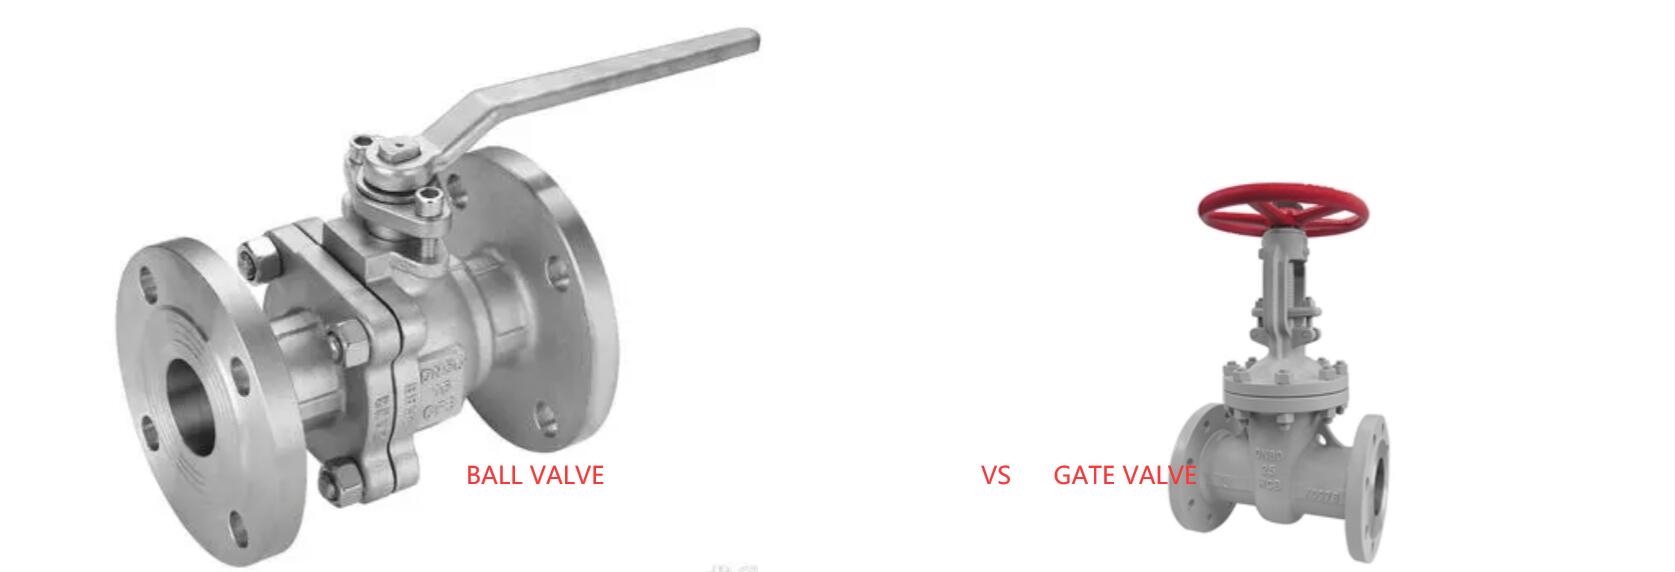 Choosing Between Gate And Ball Valves